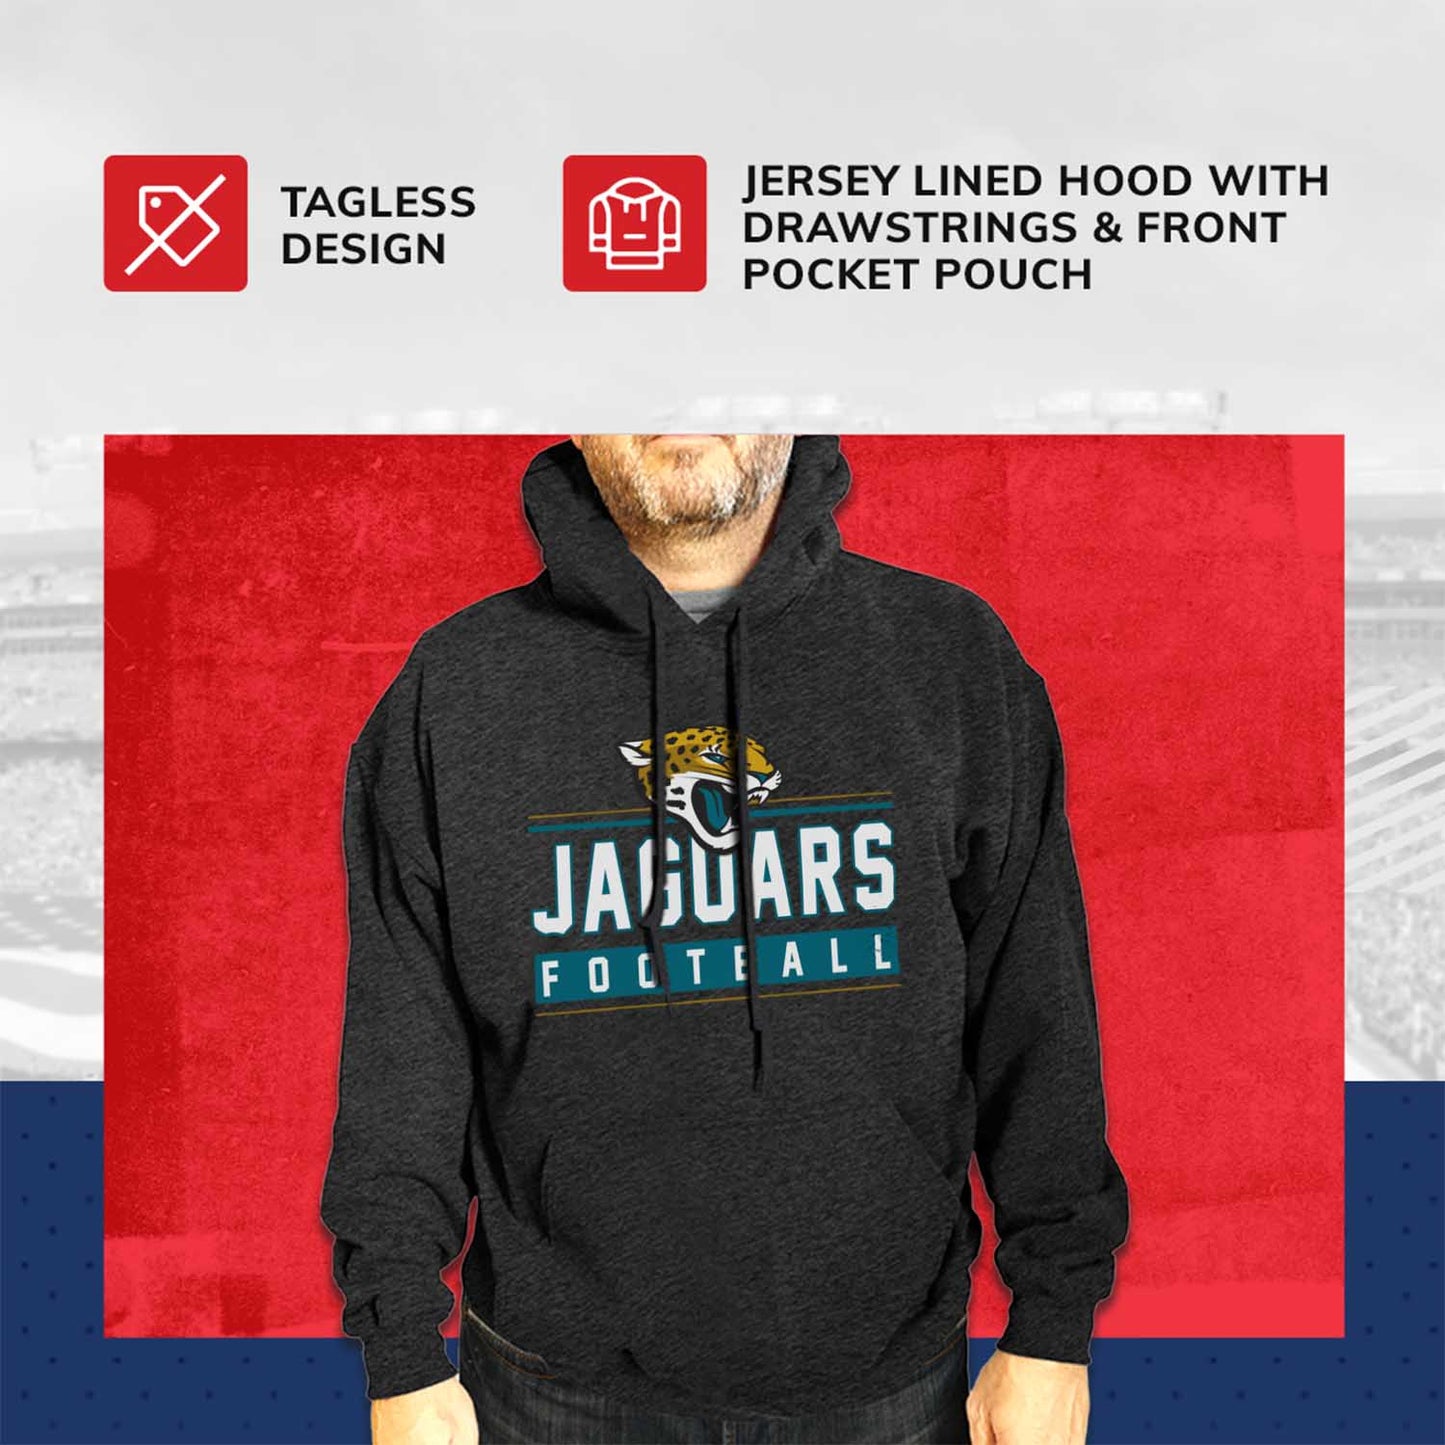 Jacksonville Jaguars NFL Adult True Fan Hooded Charcoal Sweatshirt - Charcoal